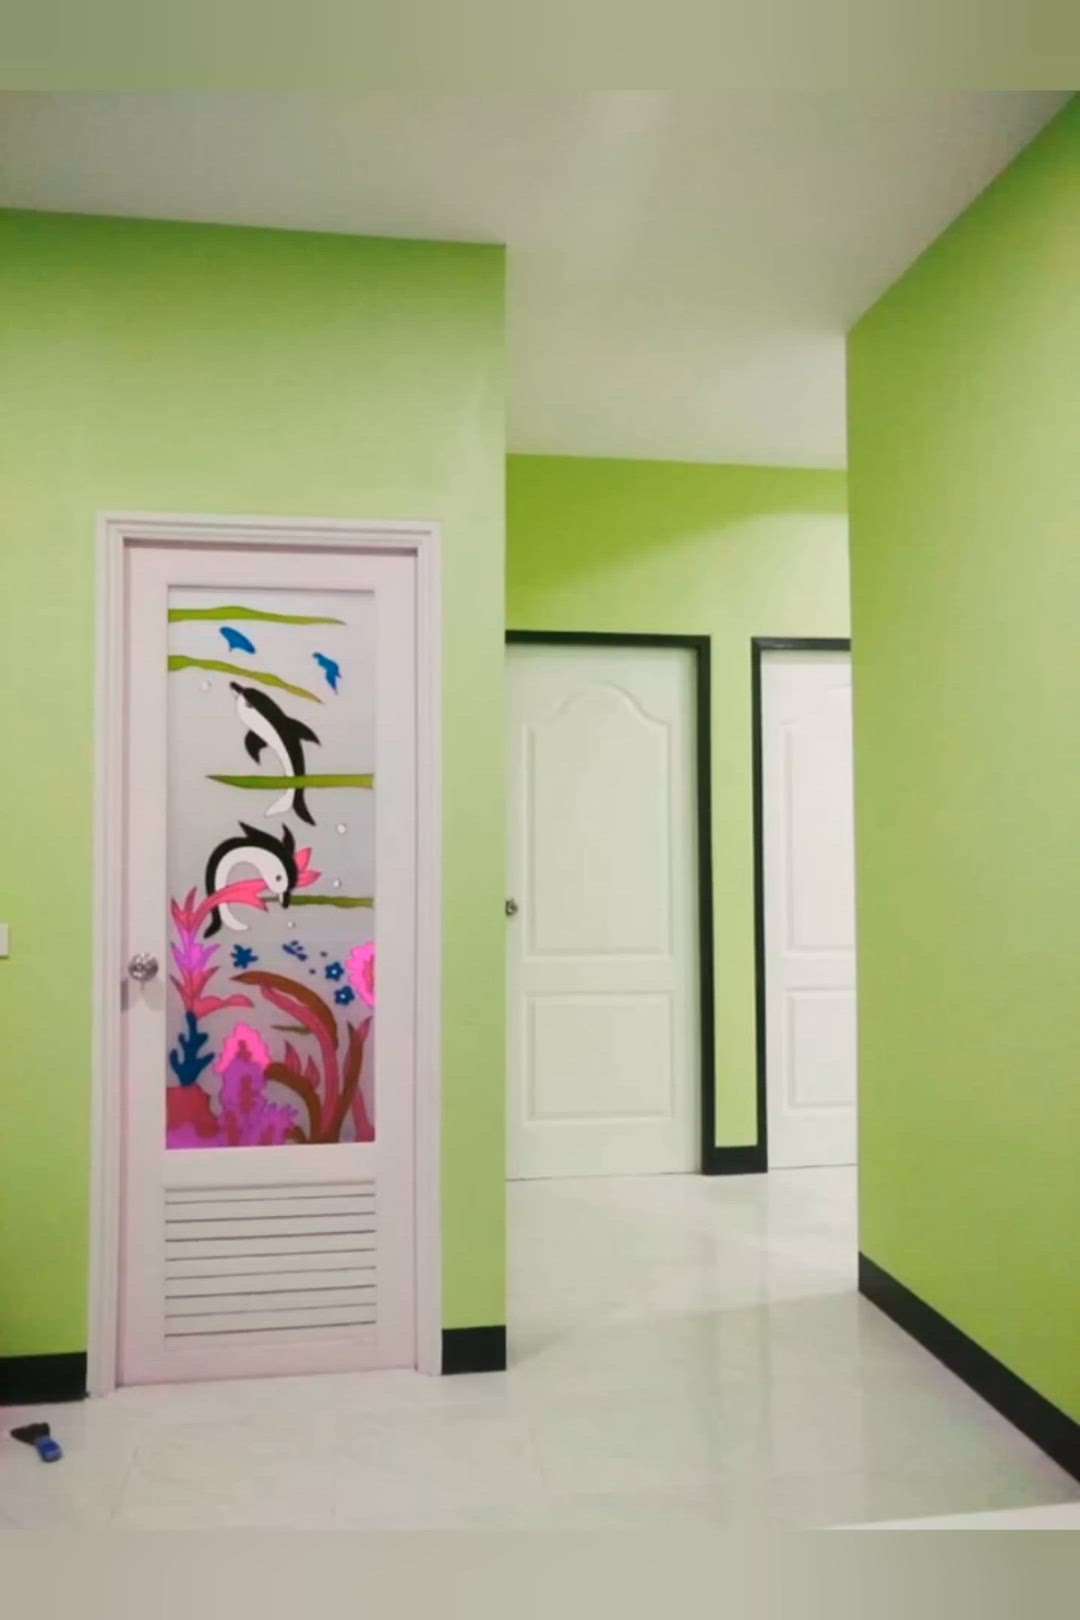 house , flat , office, villa  and Banglow Painting advice and enquiry ke liyea call kare 8387031580 Rakesh ji   #asianpaint   #interior_delux  #nerolac  #indigopaints  #bergerpaint